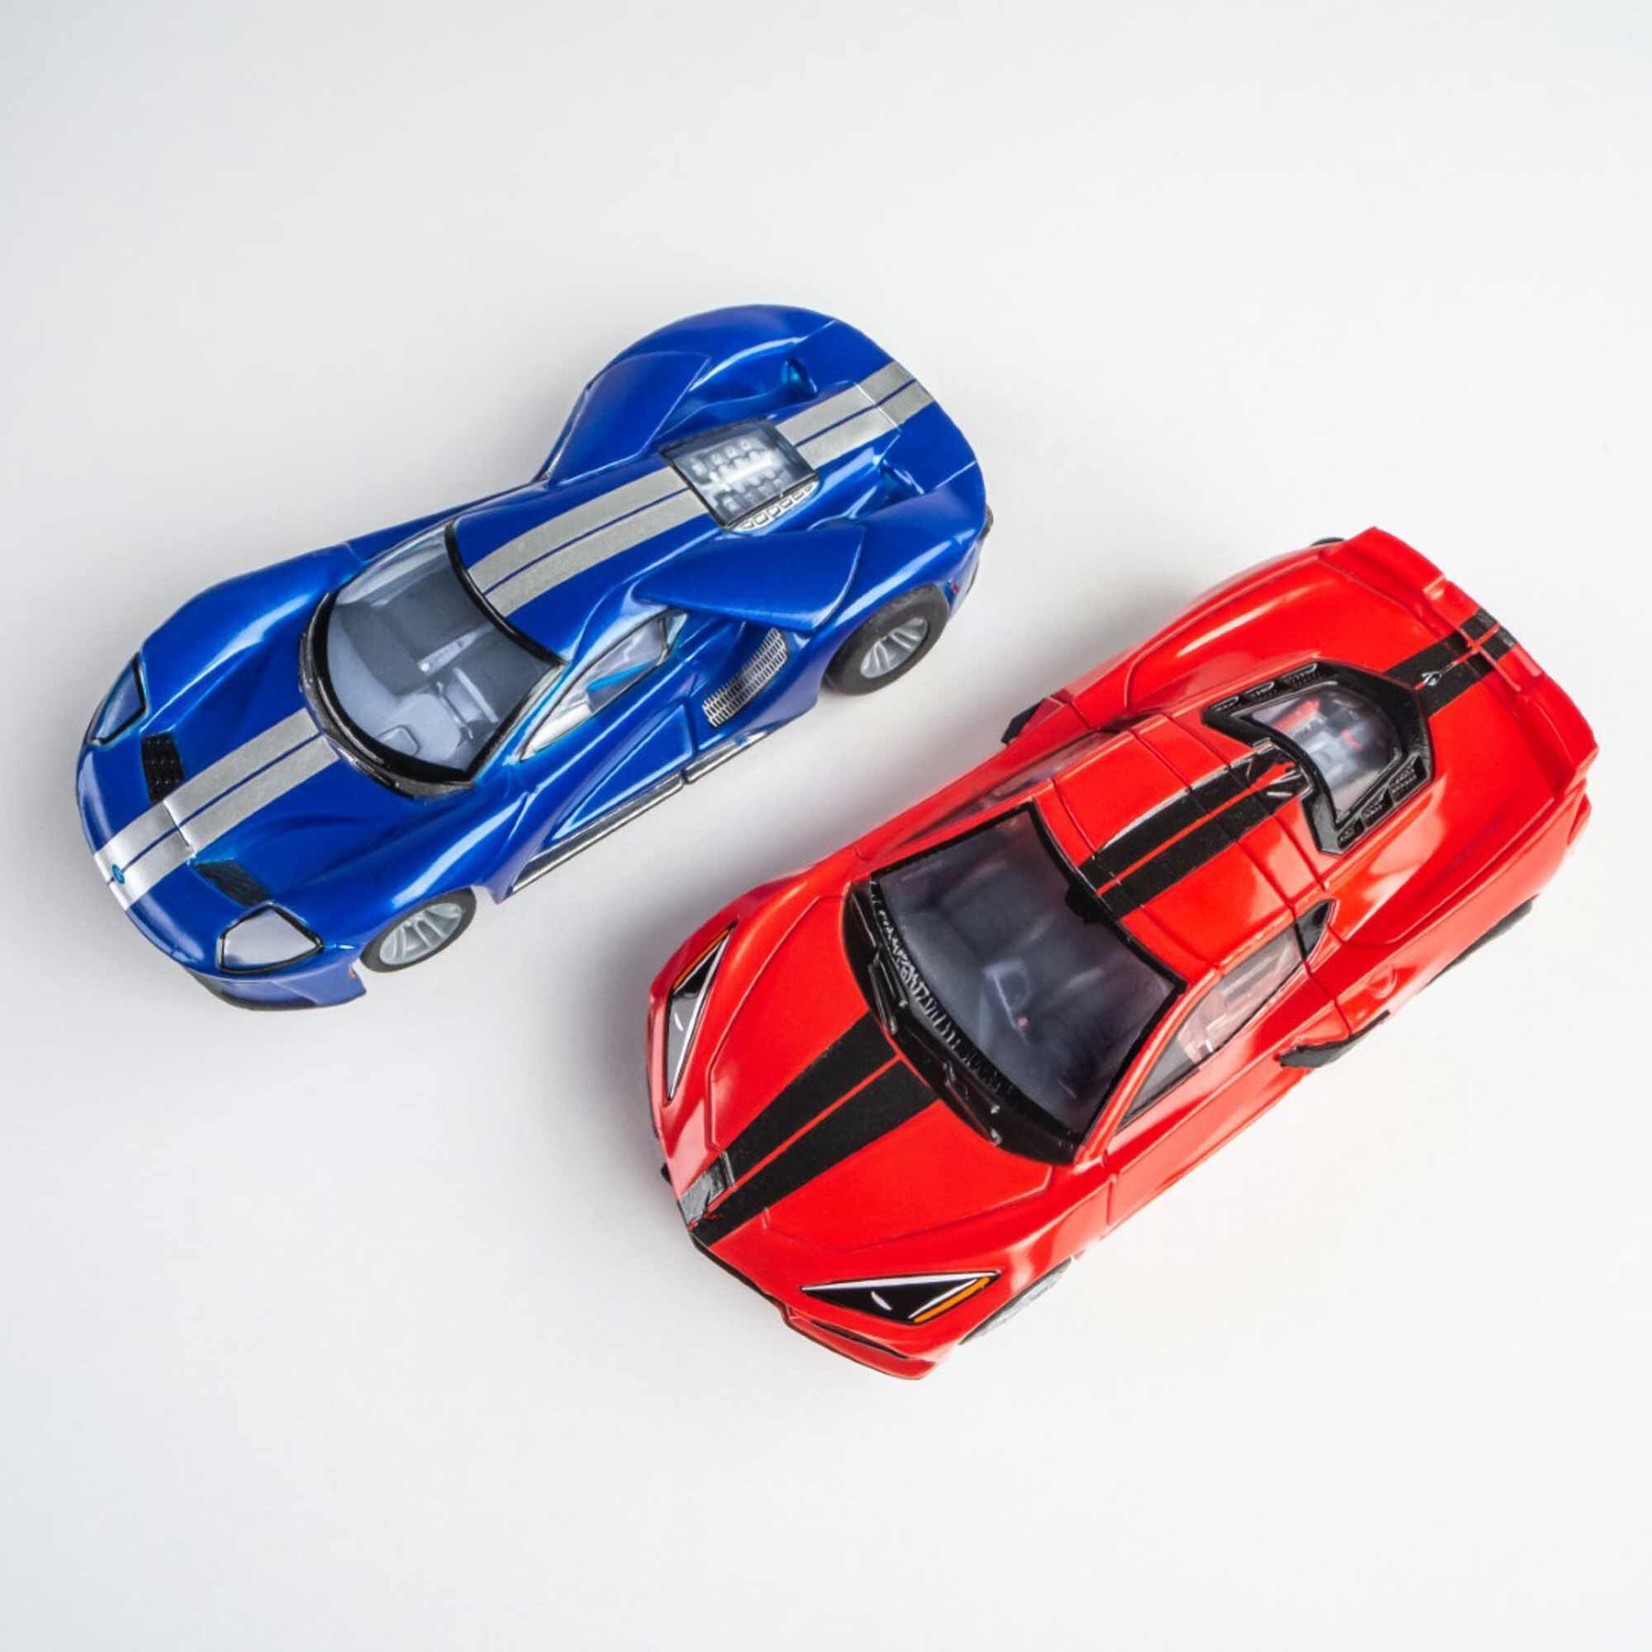 AFX Slot Cars Super Cars 15-Foot Mega G+ HO Slot Car Track Set